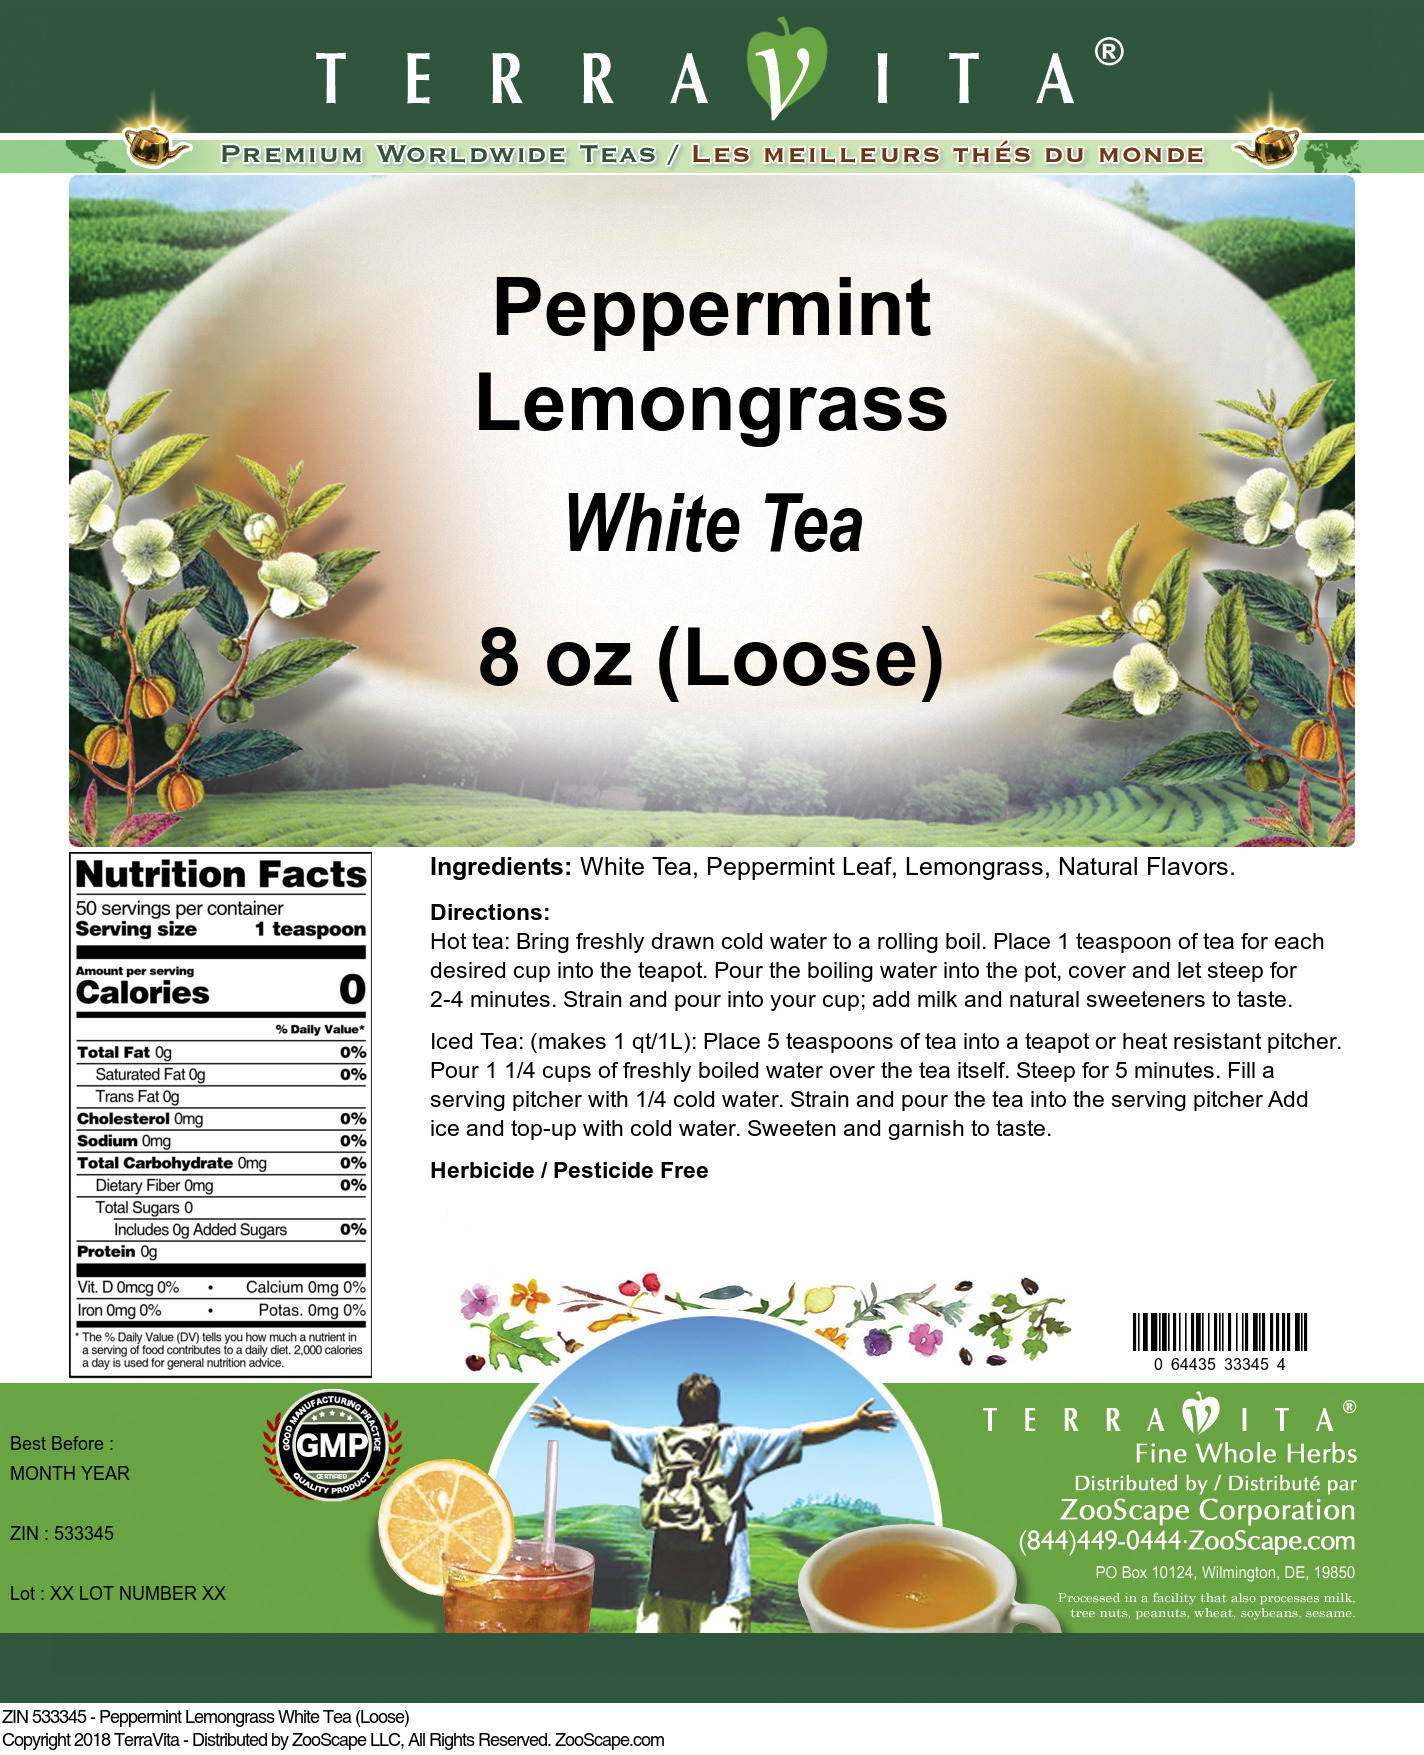 Peppermint Lemongrass White Tea (Loose) - Label